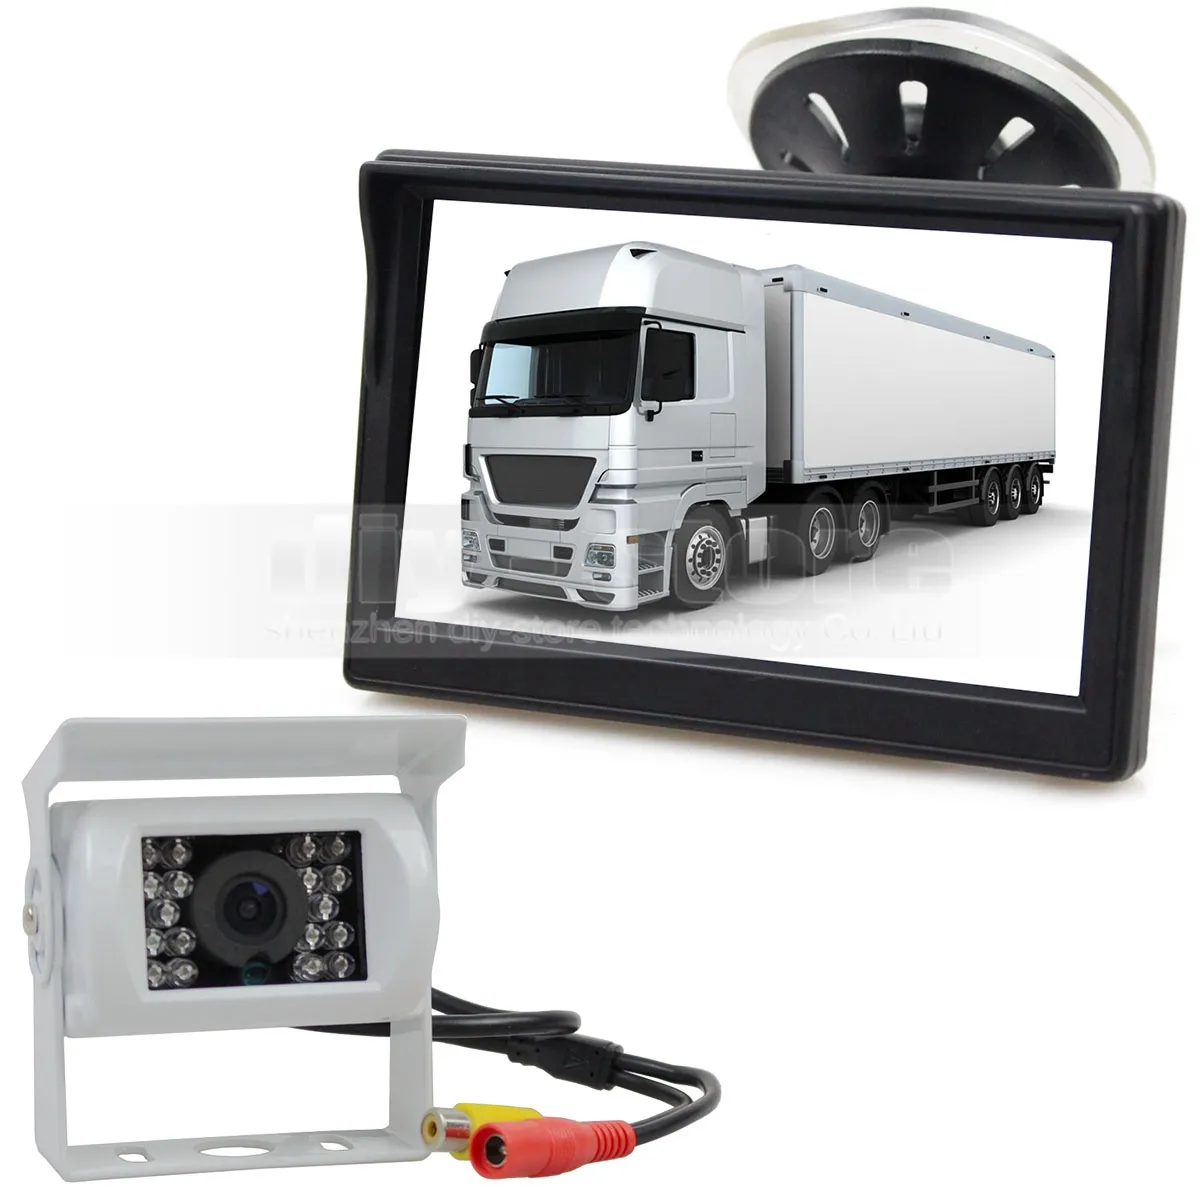 5inch Video Car Monitor IR Car Camera Rear View Camera Security System Parking Reversing System Kit for Car Van Truck Bus